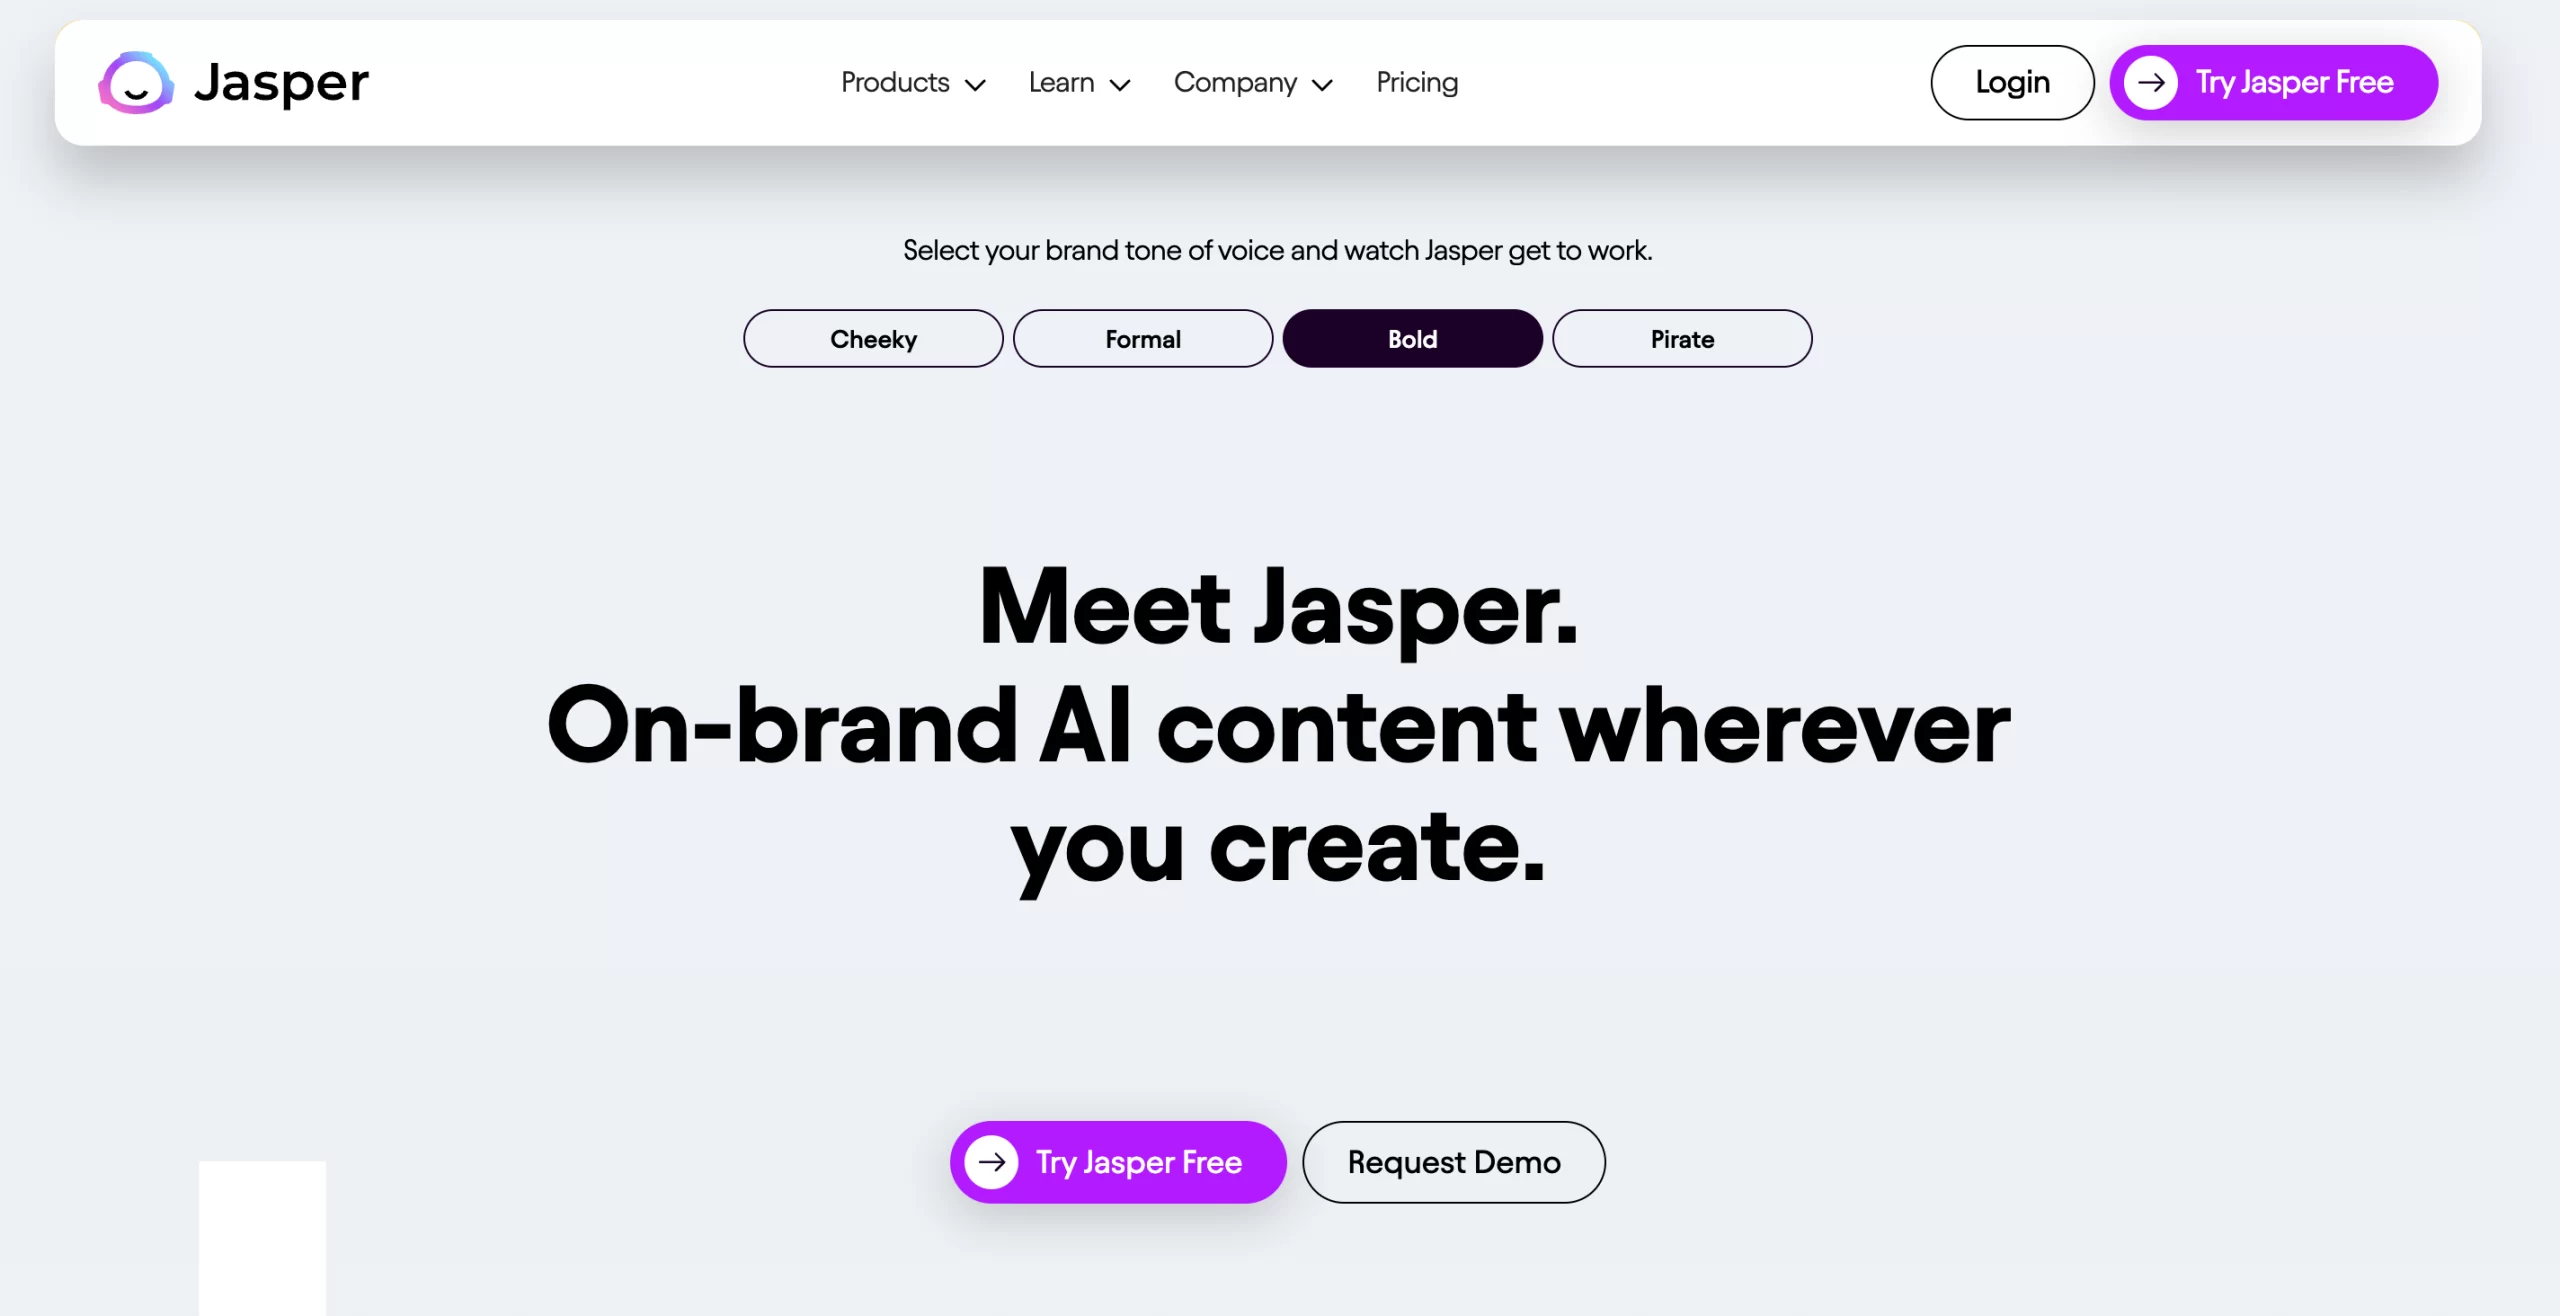 Jasper AI's website homepage